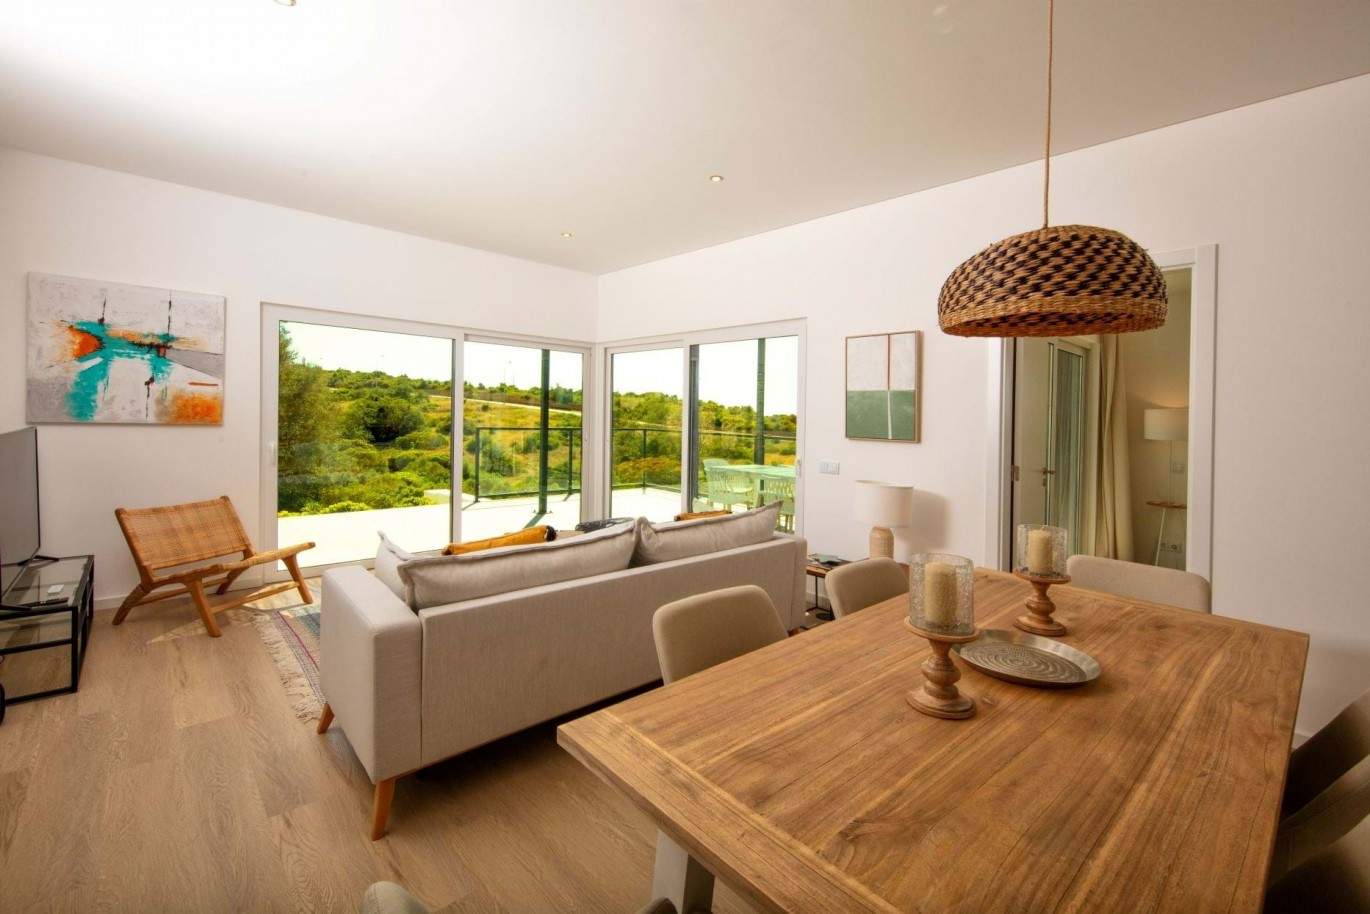 2+1 bedroom villa in resort, for sale in Carvoeiro, Algarve_204848